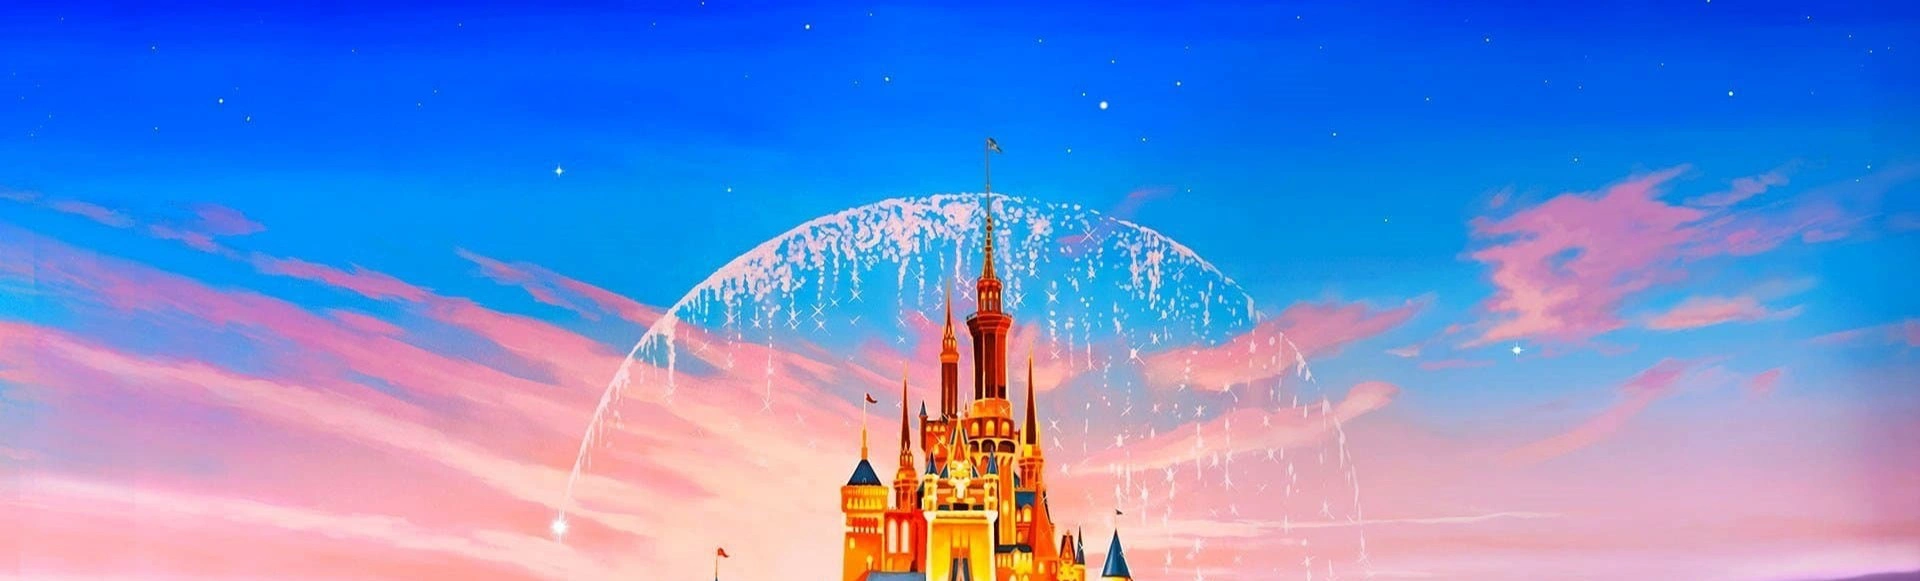 Coca-Cola Arena turns into a fairytale kingdom for Disney Princess concert